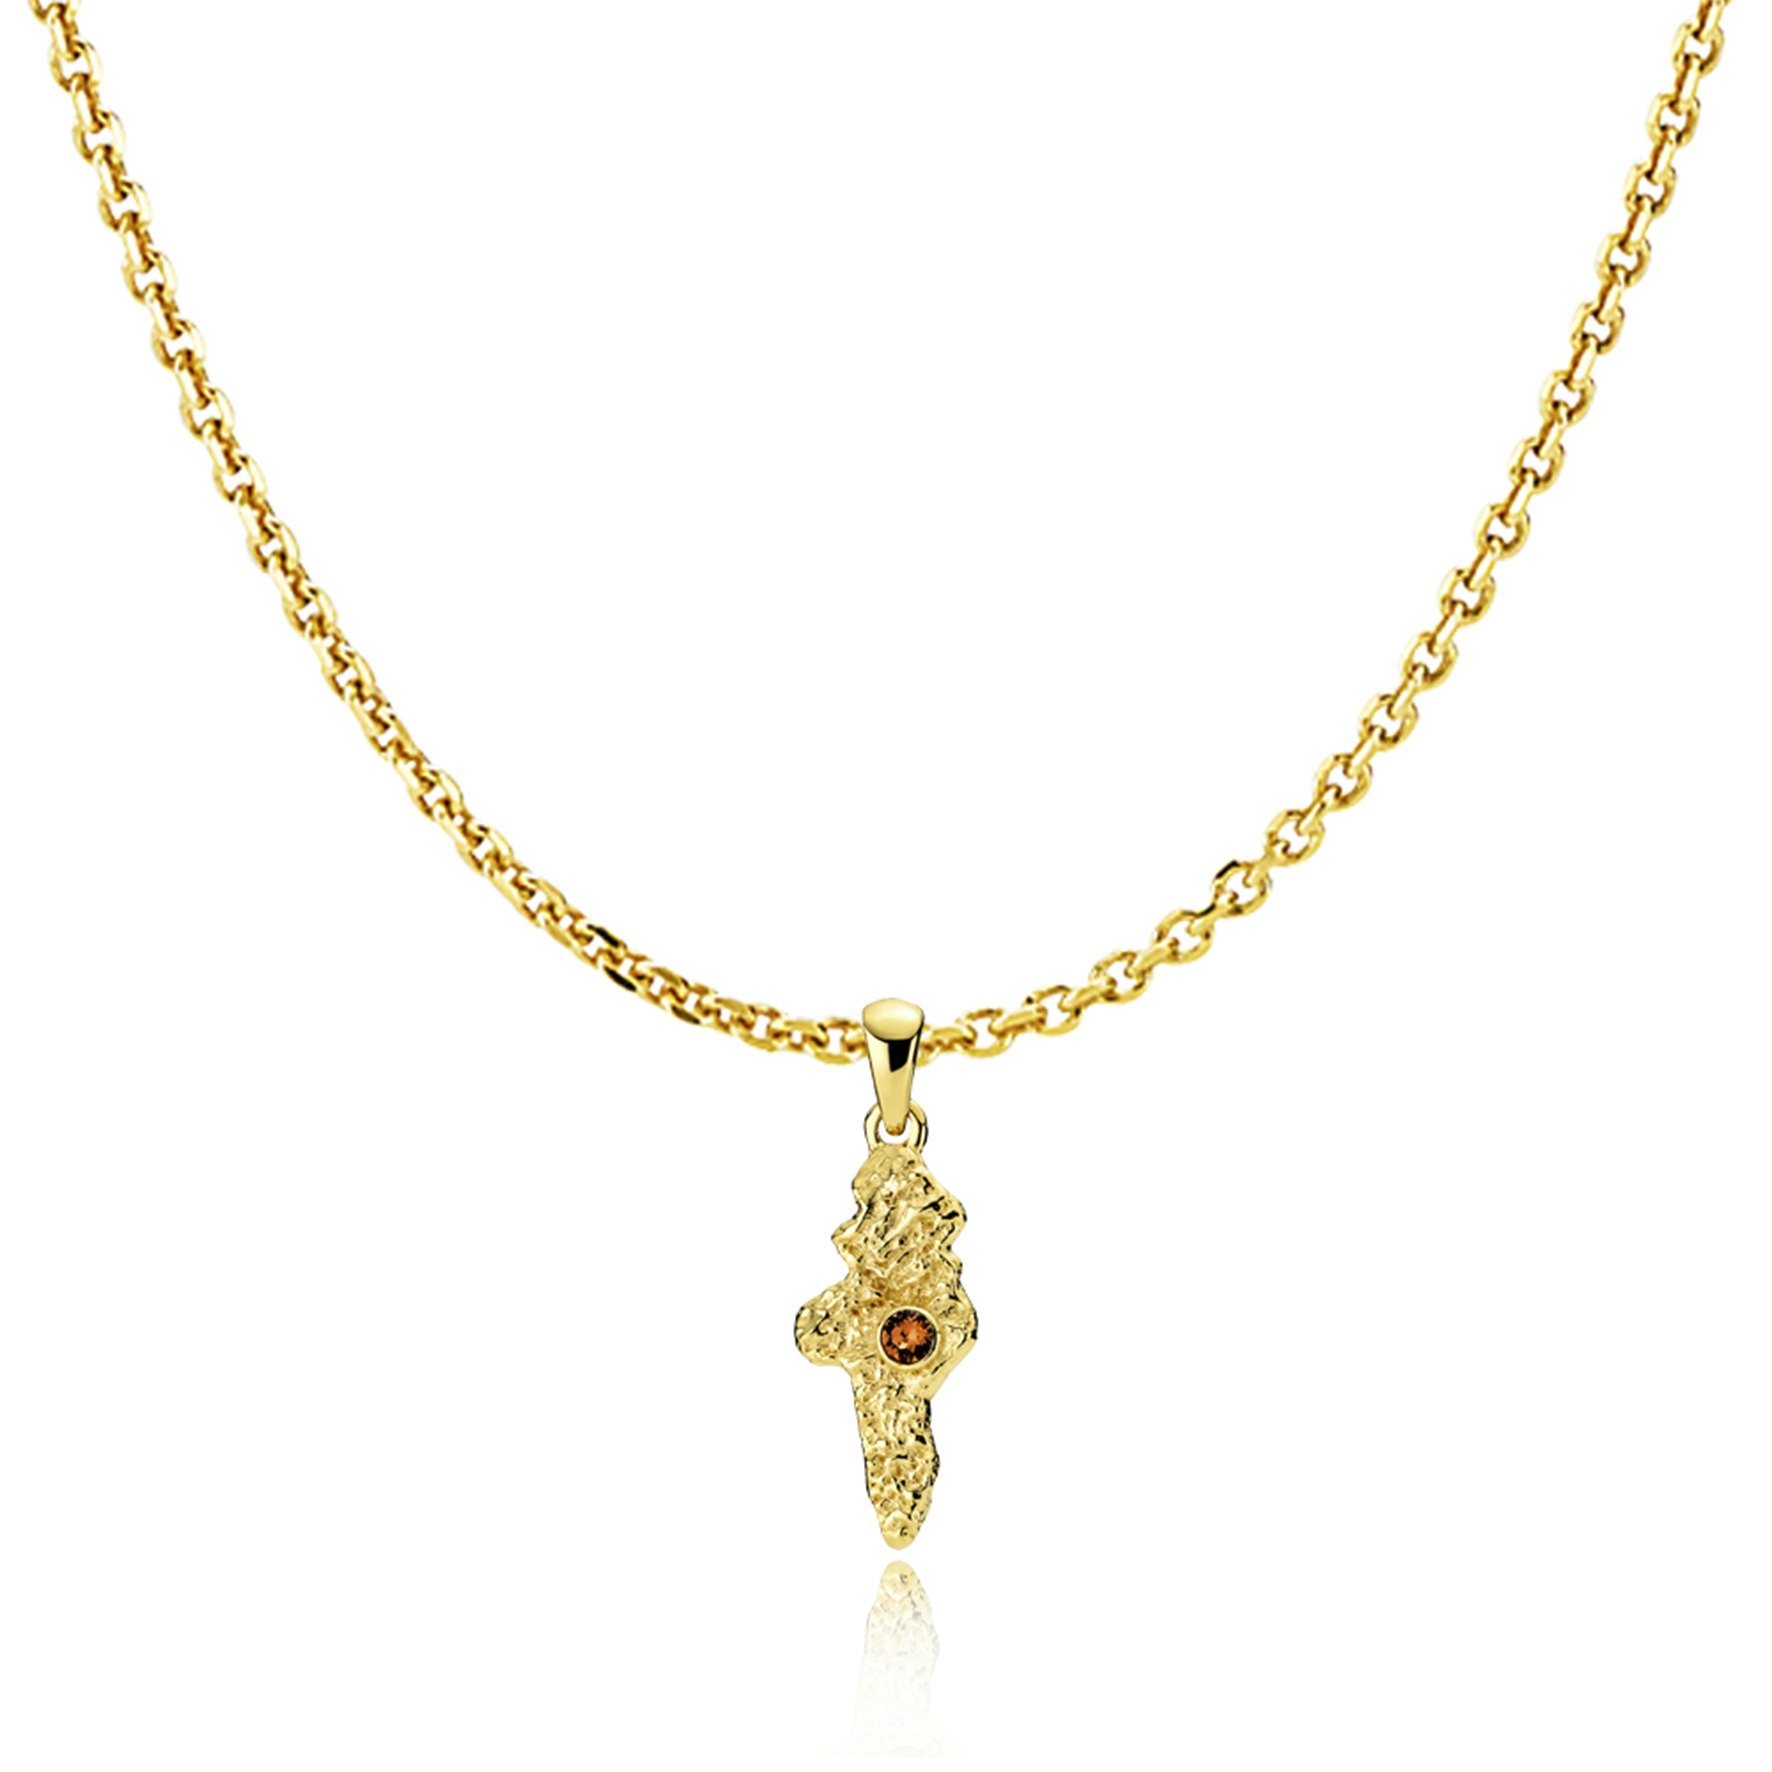 Silke By Sistie Pendant Necklace von Sistie in Vergoldet-Silber Sterling 925